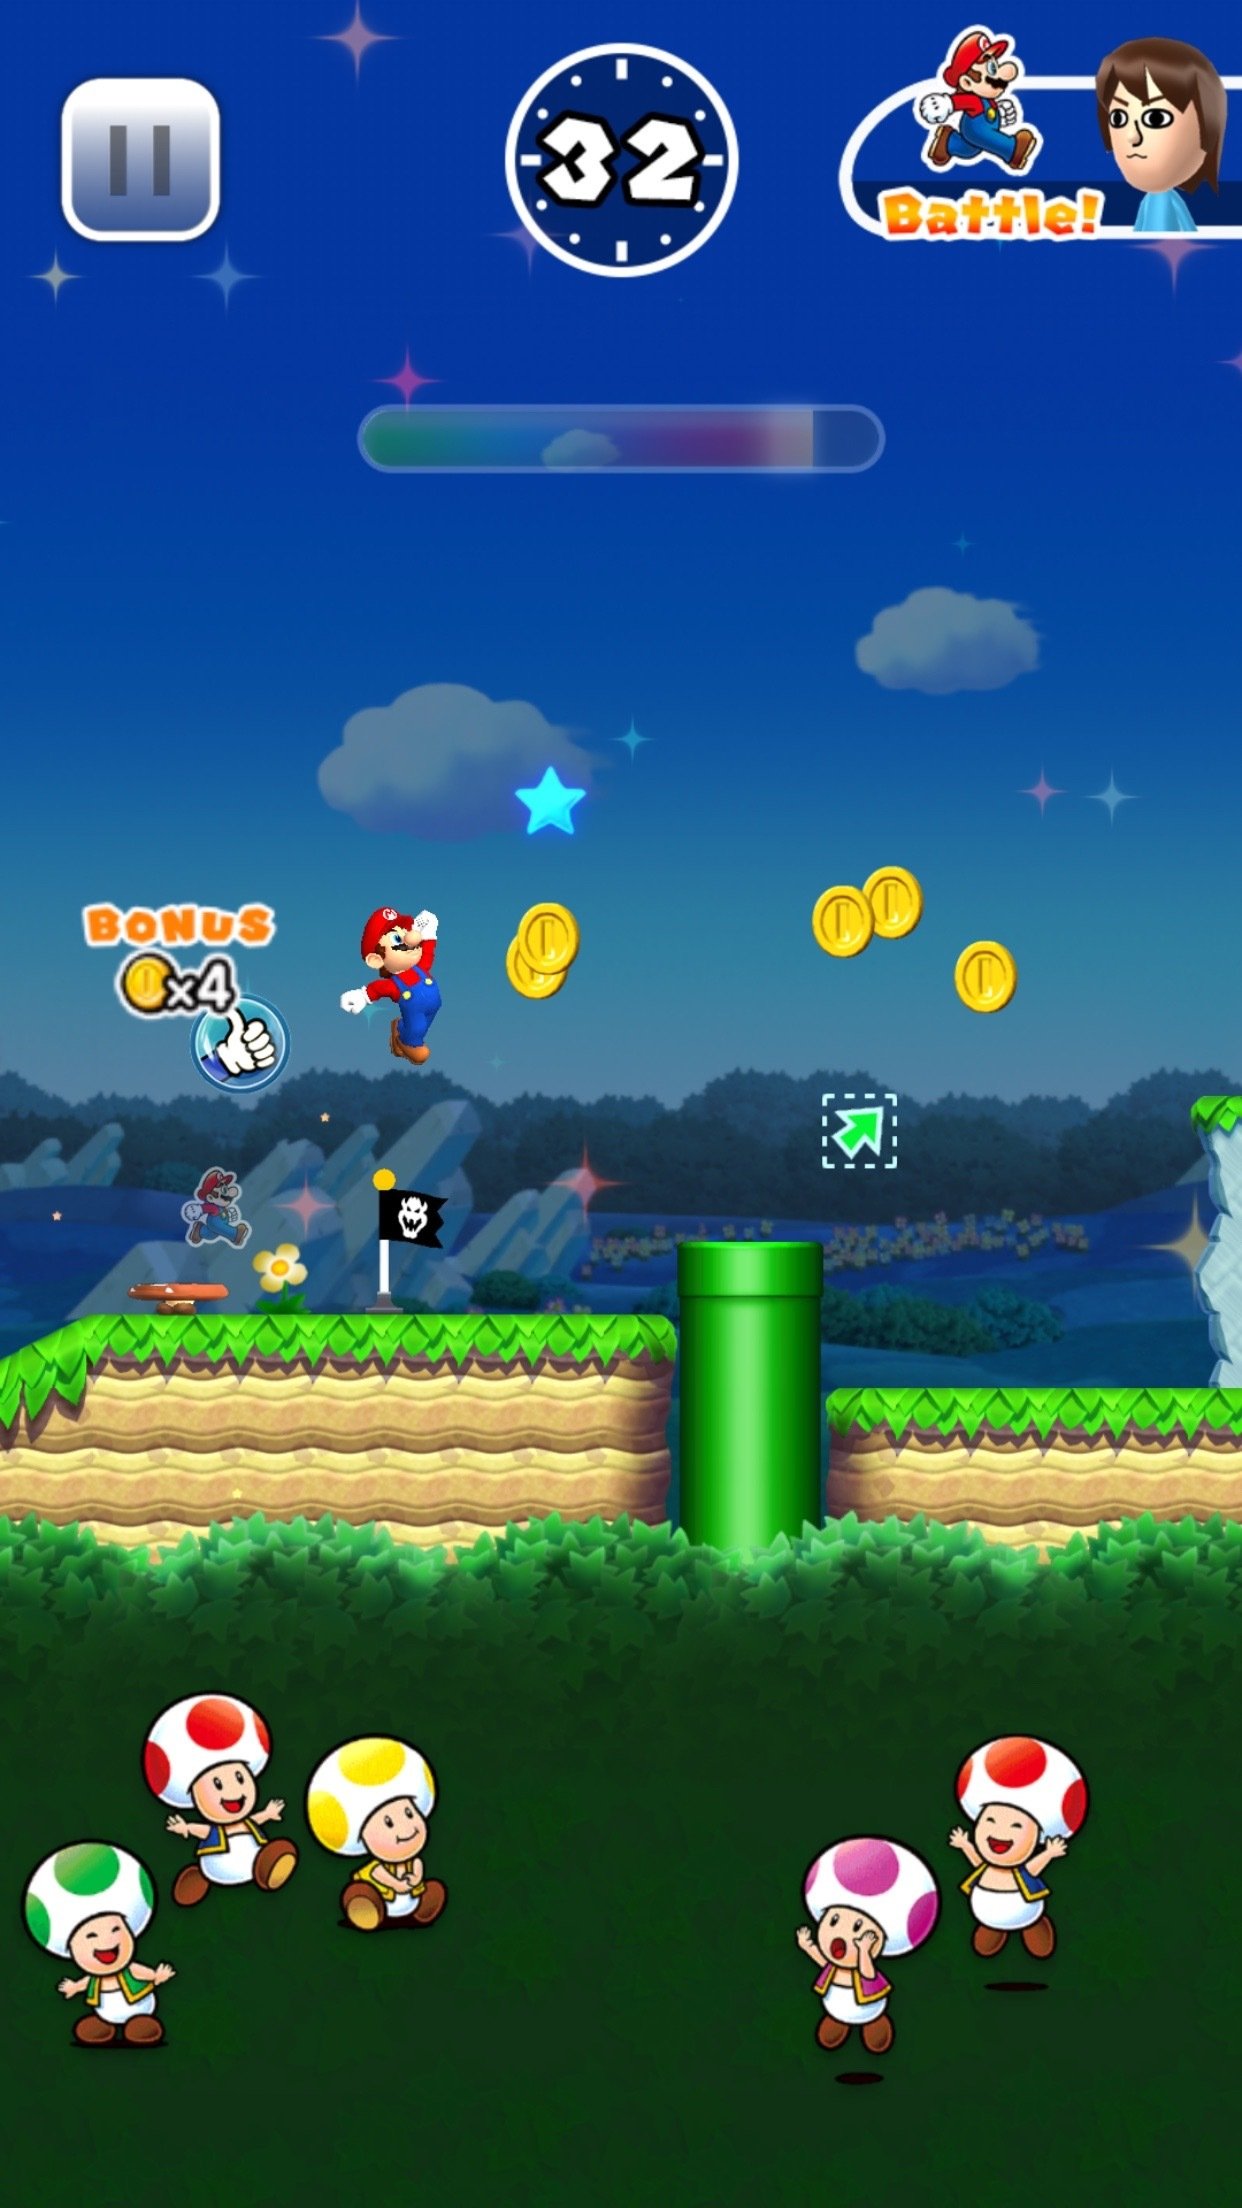 Super Mario Run announced for iOS - Gematsu